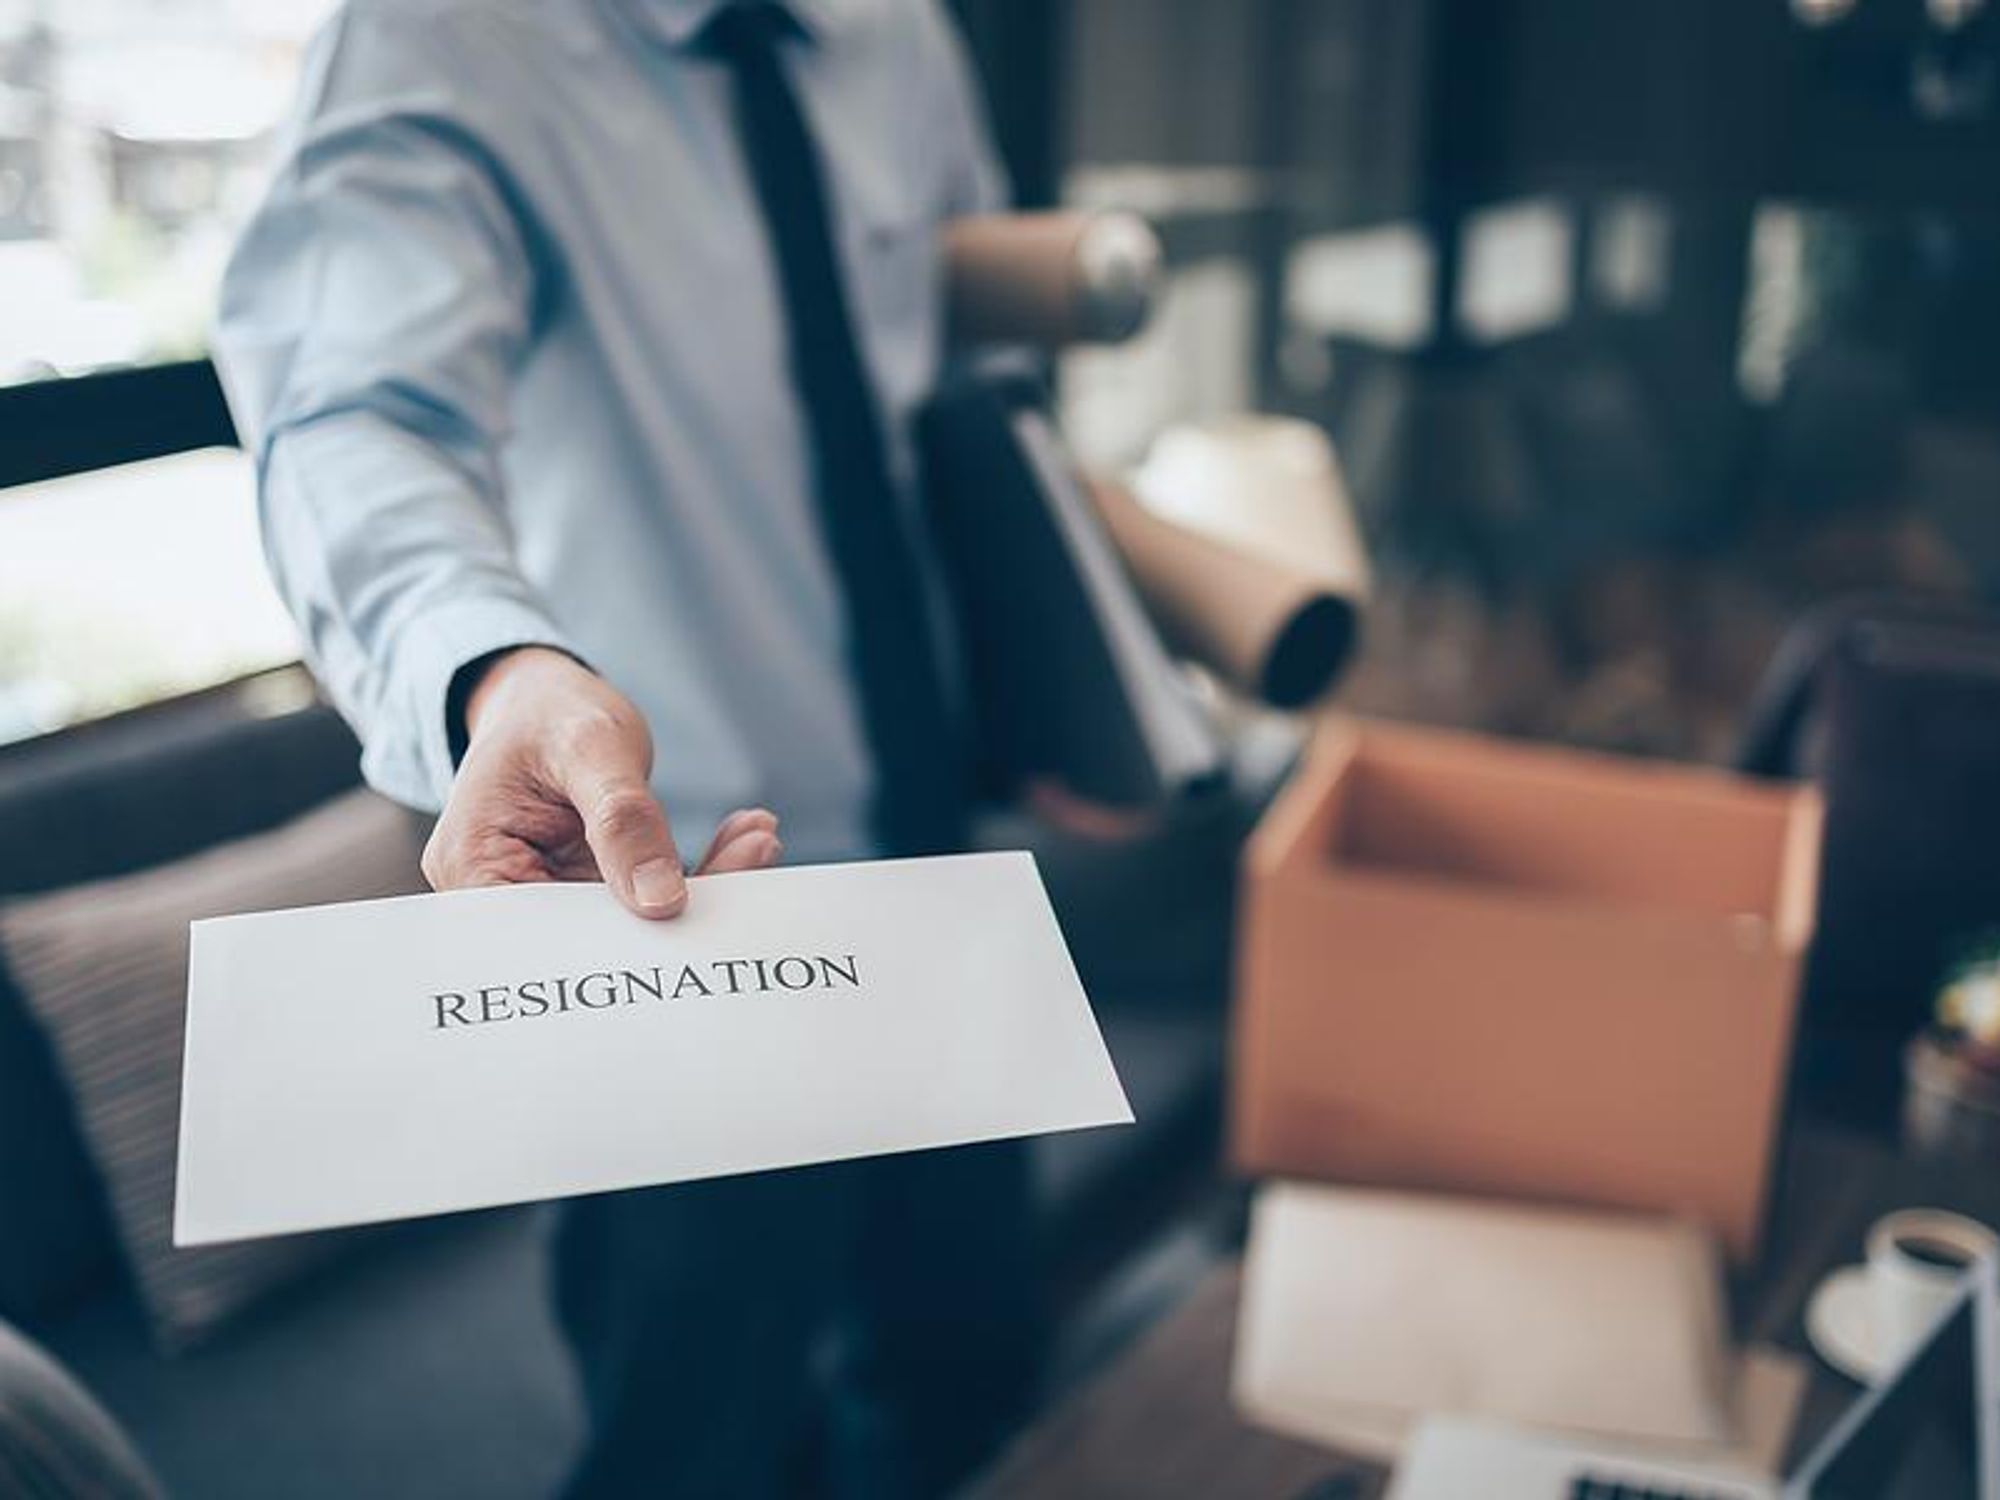 Man holding resignation letter quits his job